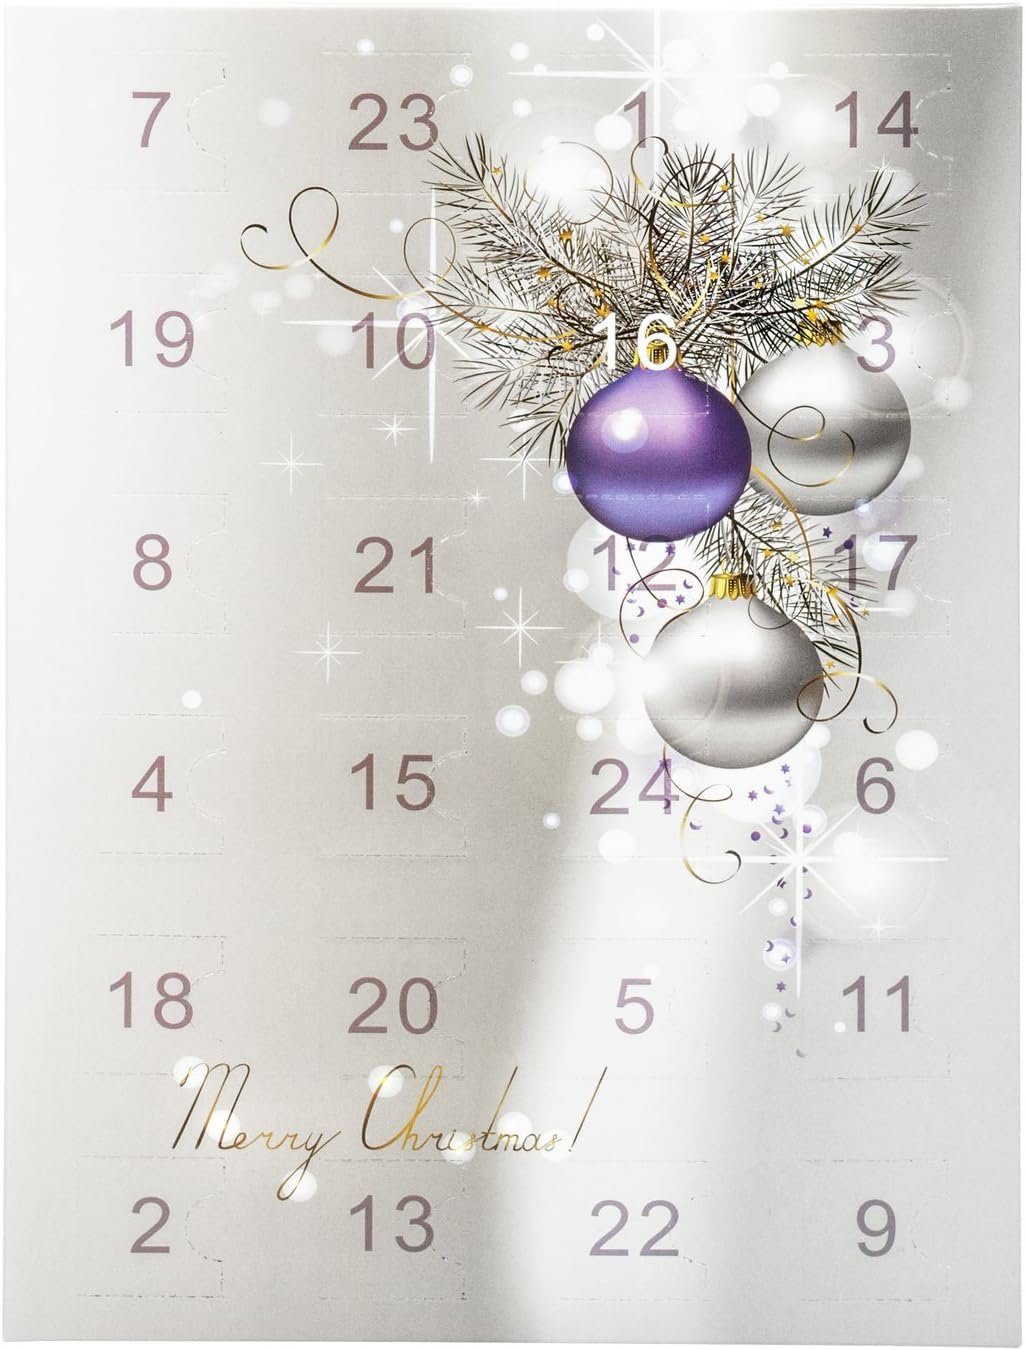 VALIOSA Schmuck-Adventskalender, Merry Christmas' Halskette, Armband Perlen-Anhänger 22 individuelle 